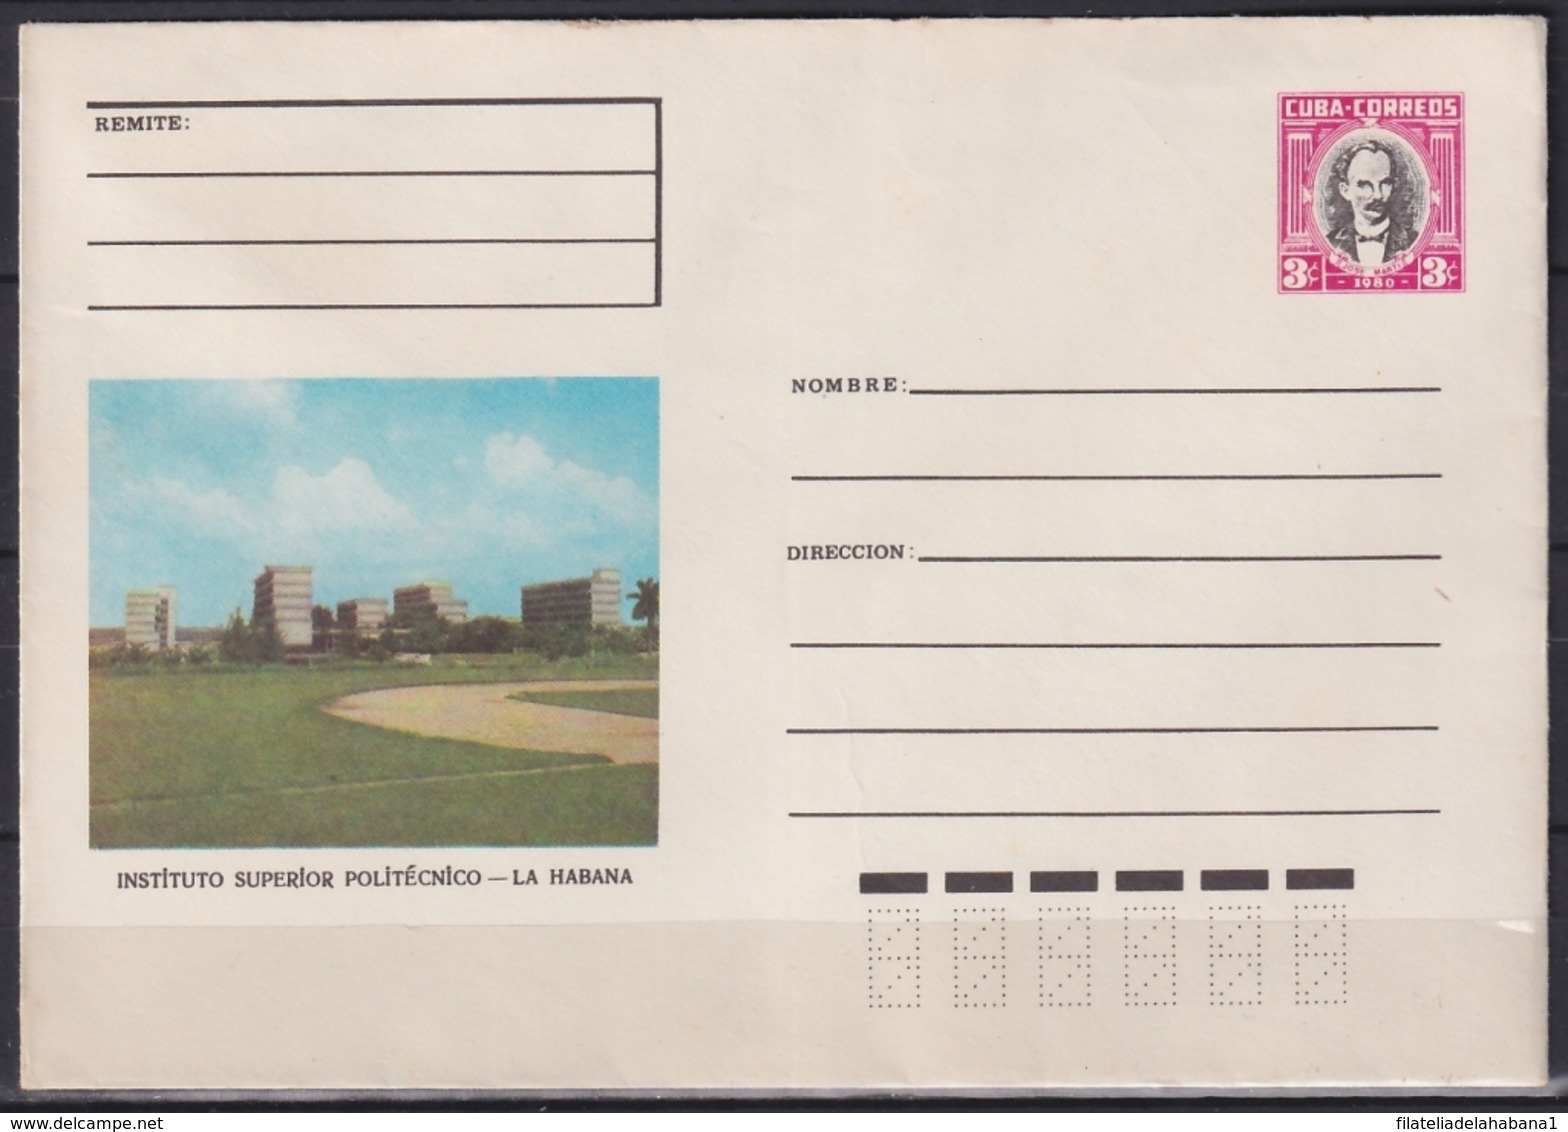 1980-EP-151 CUBA 1980 3c POSTAL STATIONERY COVER. HAVANA, INSTITUTO SUPERIOR POLITECNICO. - Lettres & Documents